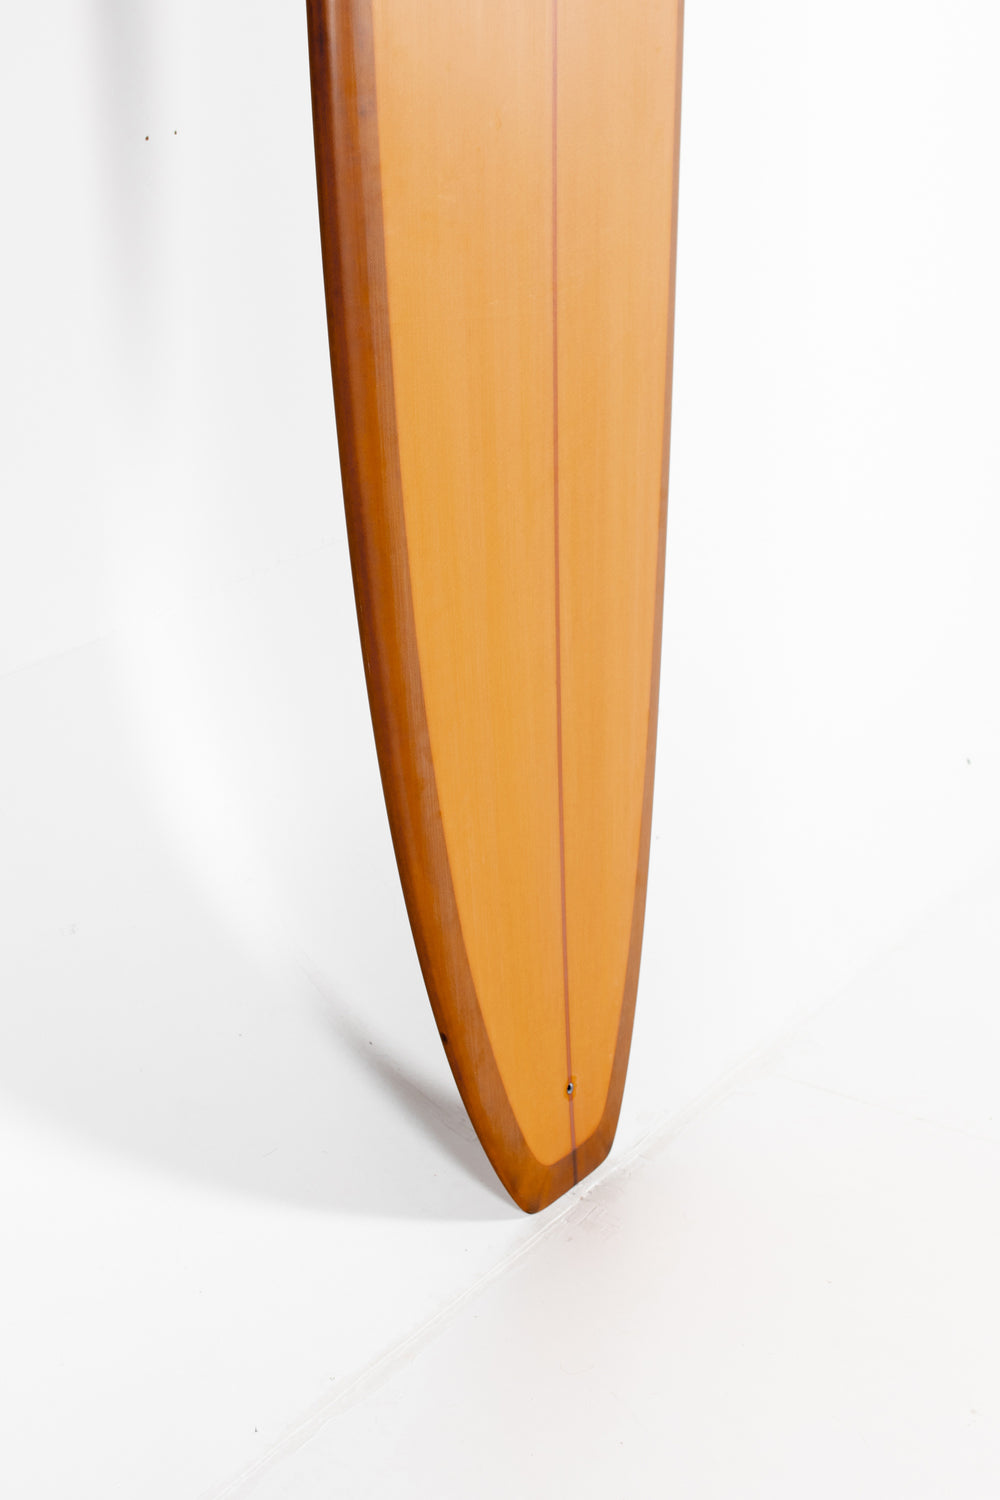 Thomas Surfboards - HARRISON CONCEPT - 9'9